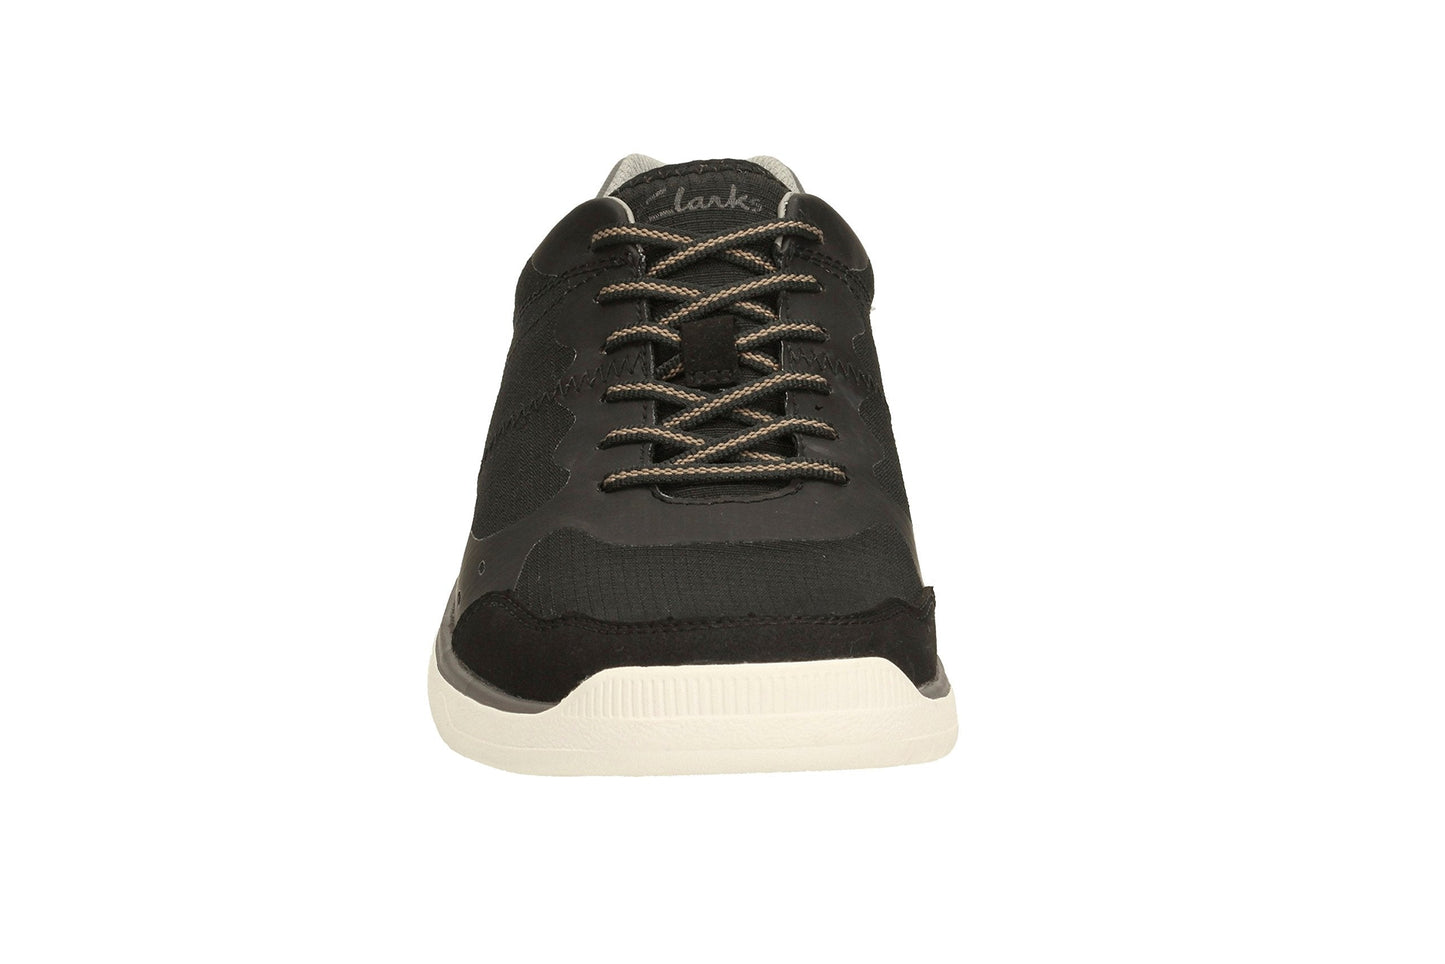 Clarks Men's Votta Edge Black Boat Shoes - 9 UK/India (43 EU)(91261203197090) 